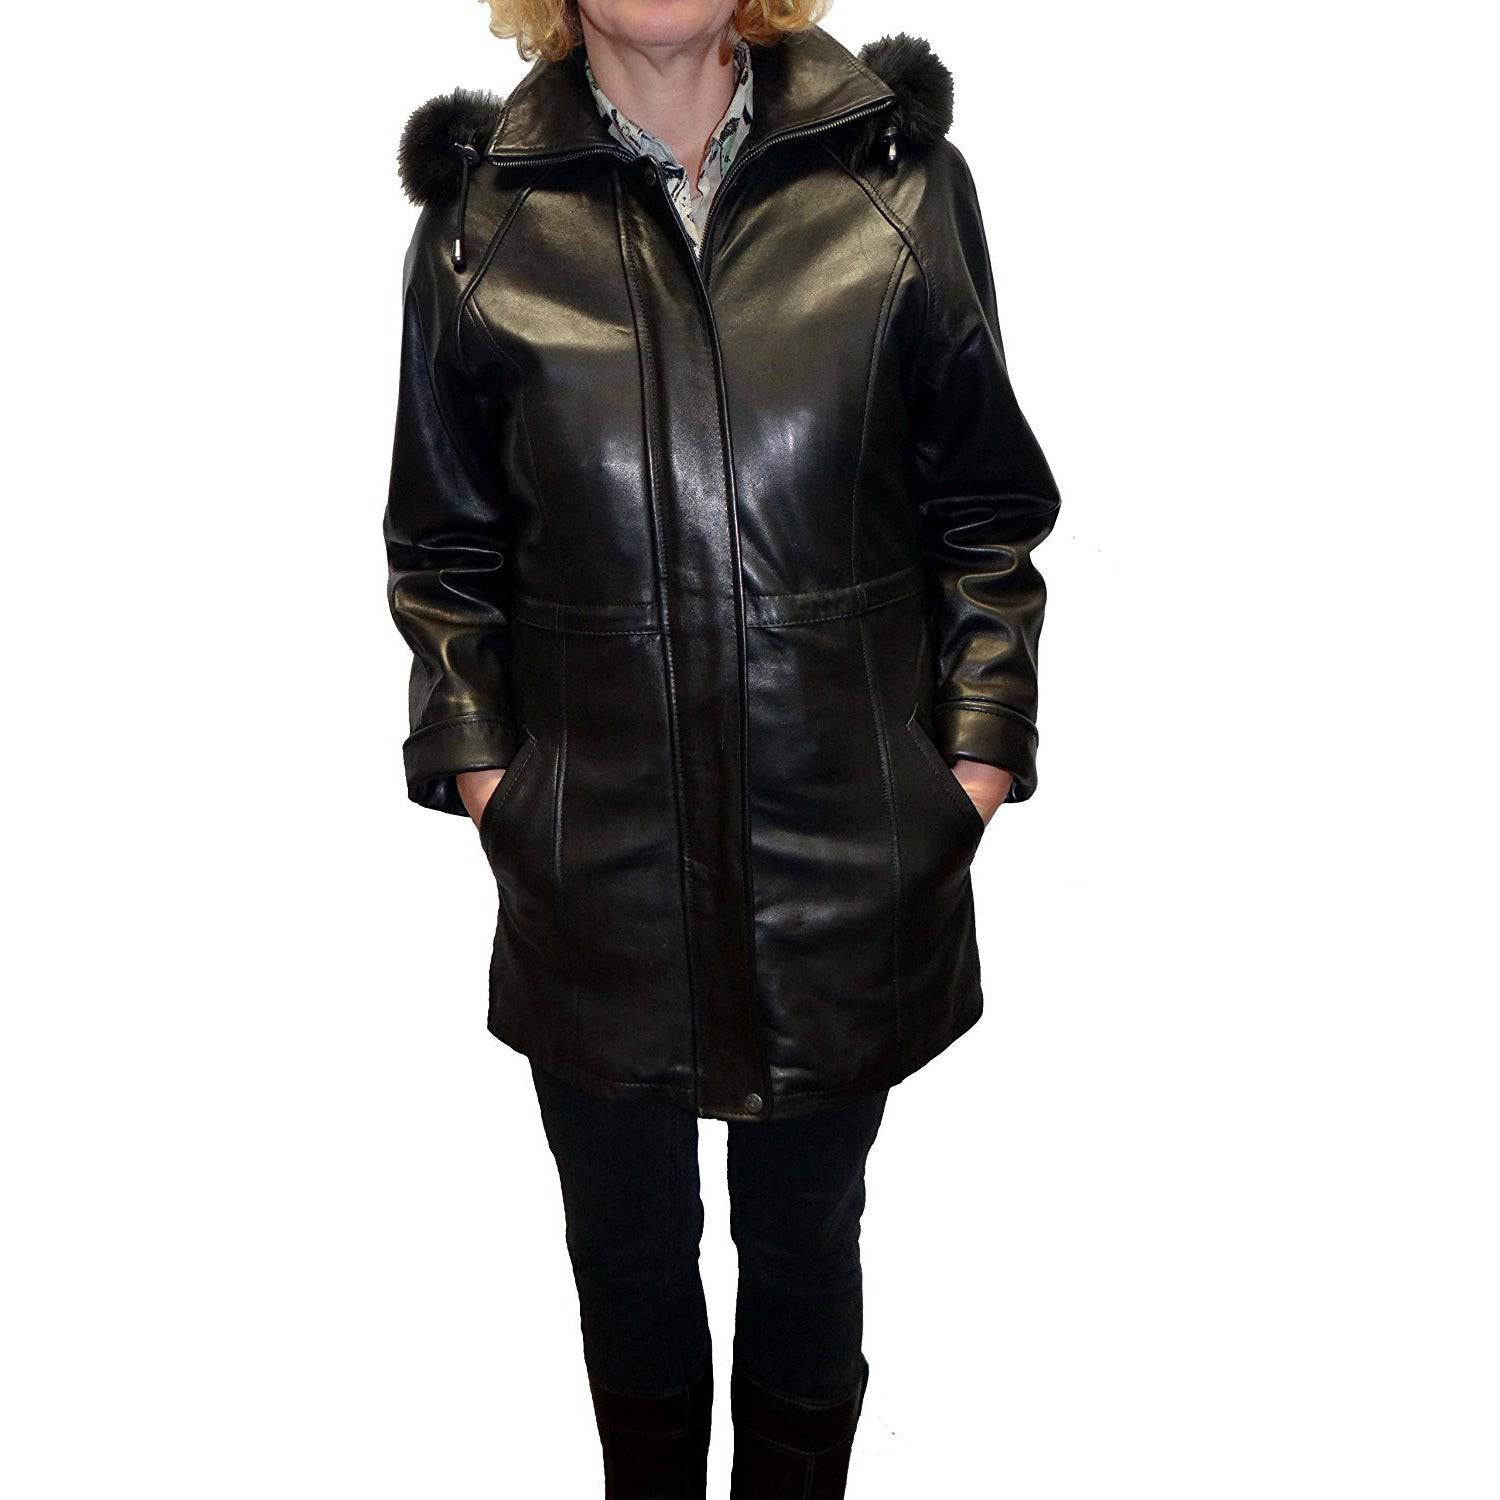 Knoles&Carter Women's Fox Fur Hooded Leather Jacket